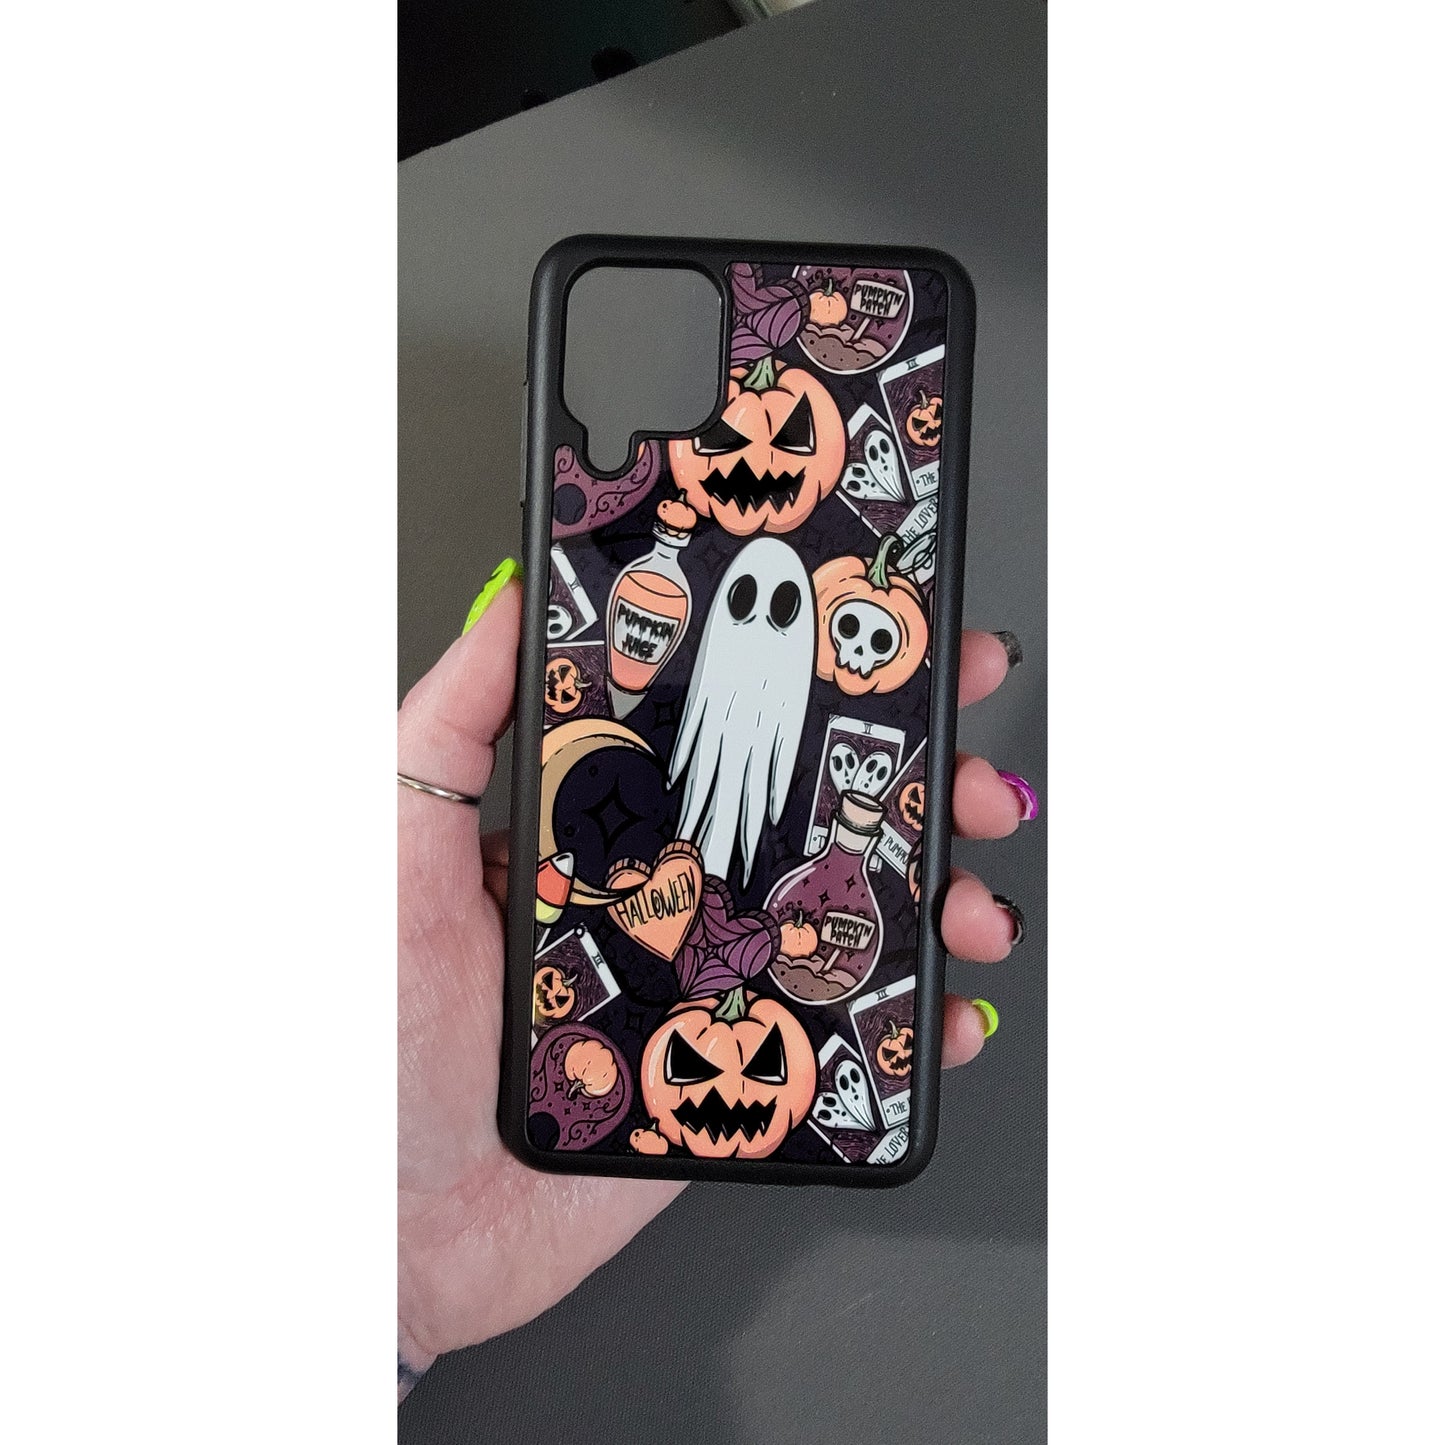 Spoopy Halloween Phone case